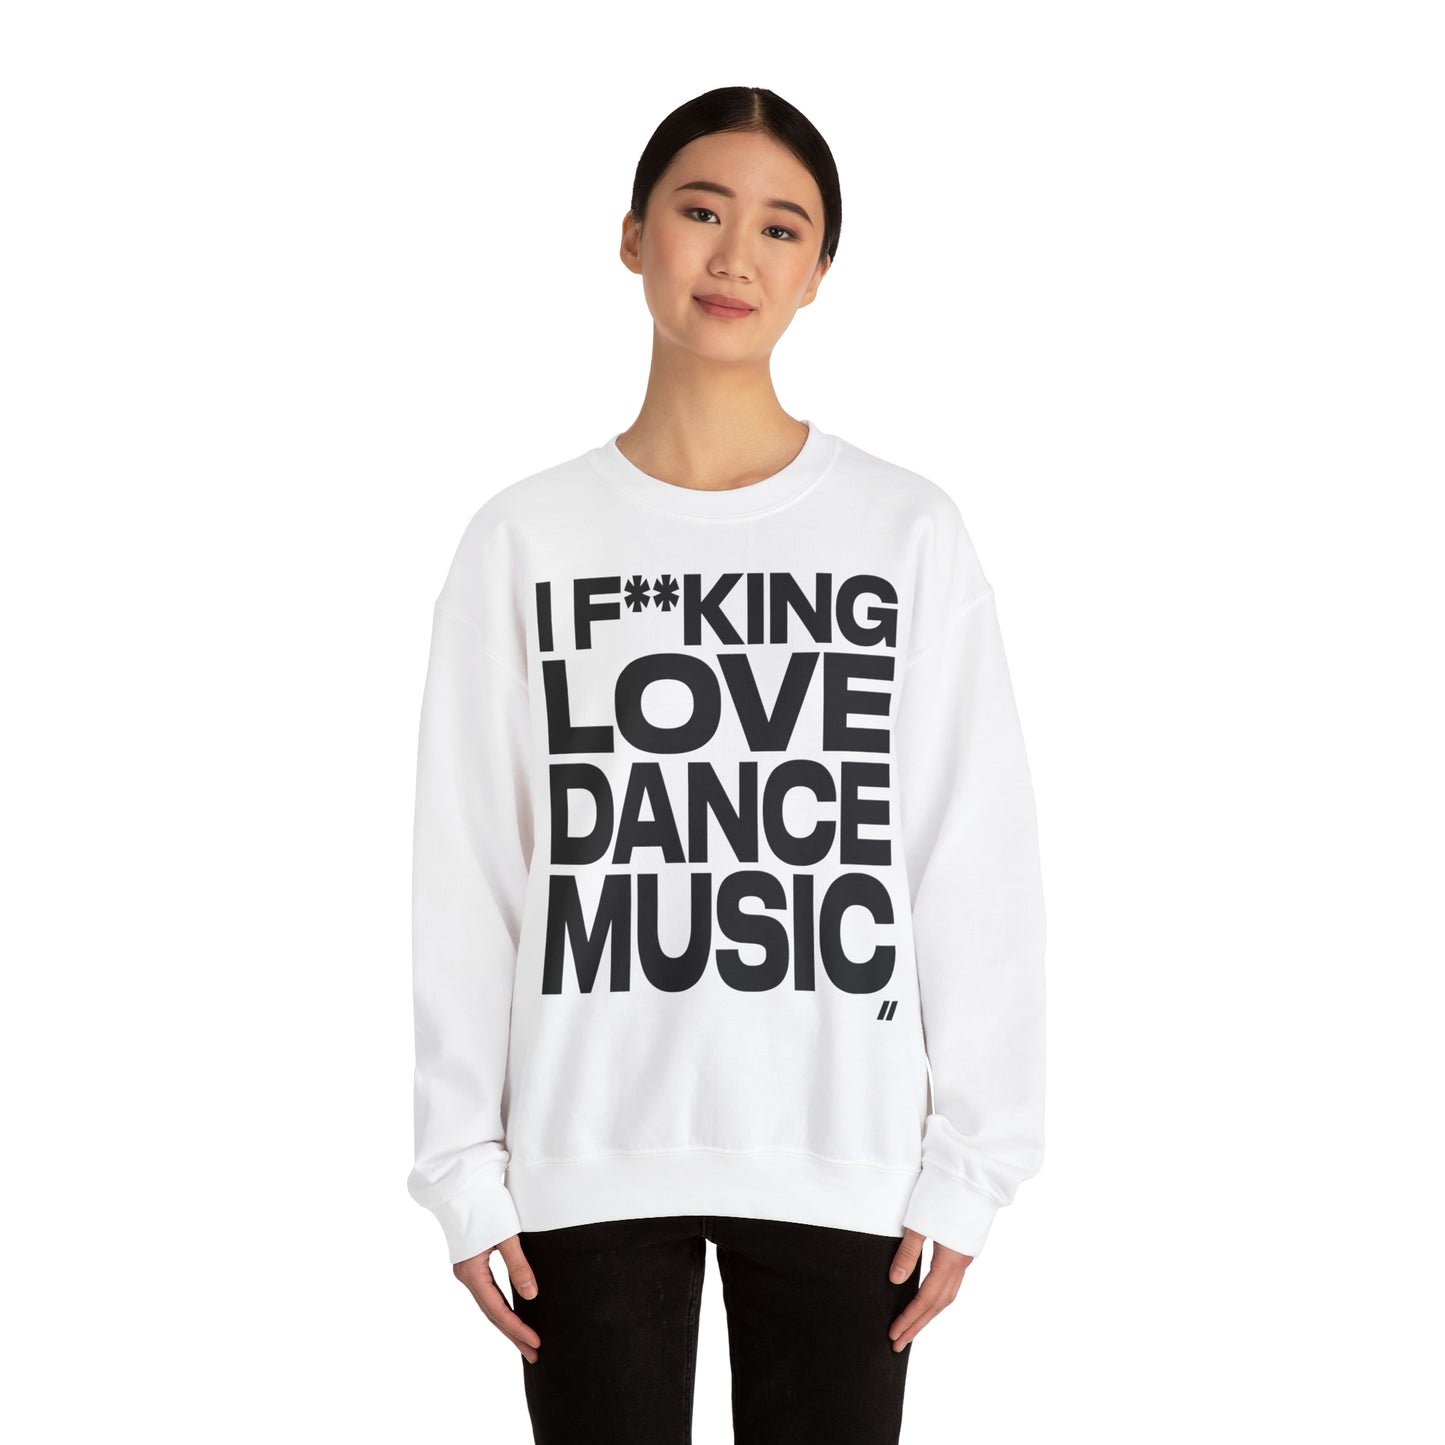 I F**king Love Dance Music - Unisex Crewneck Sweatshirt